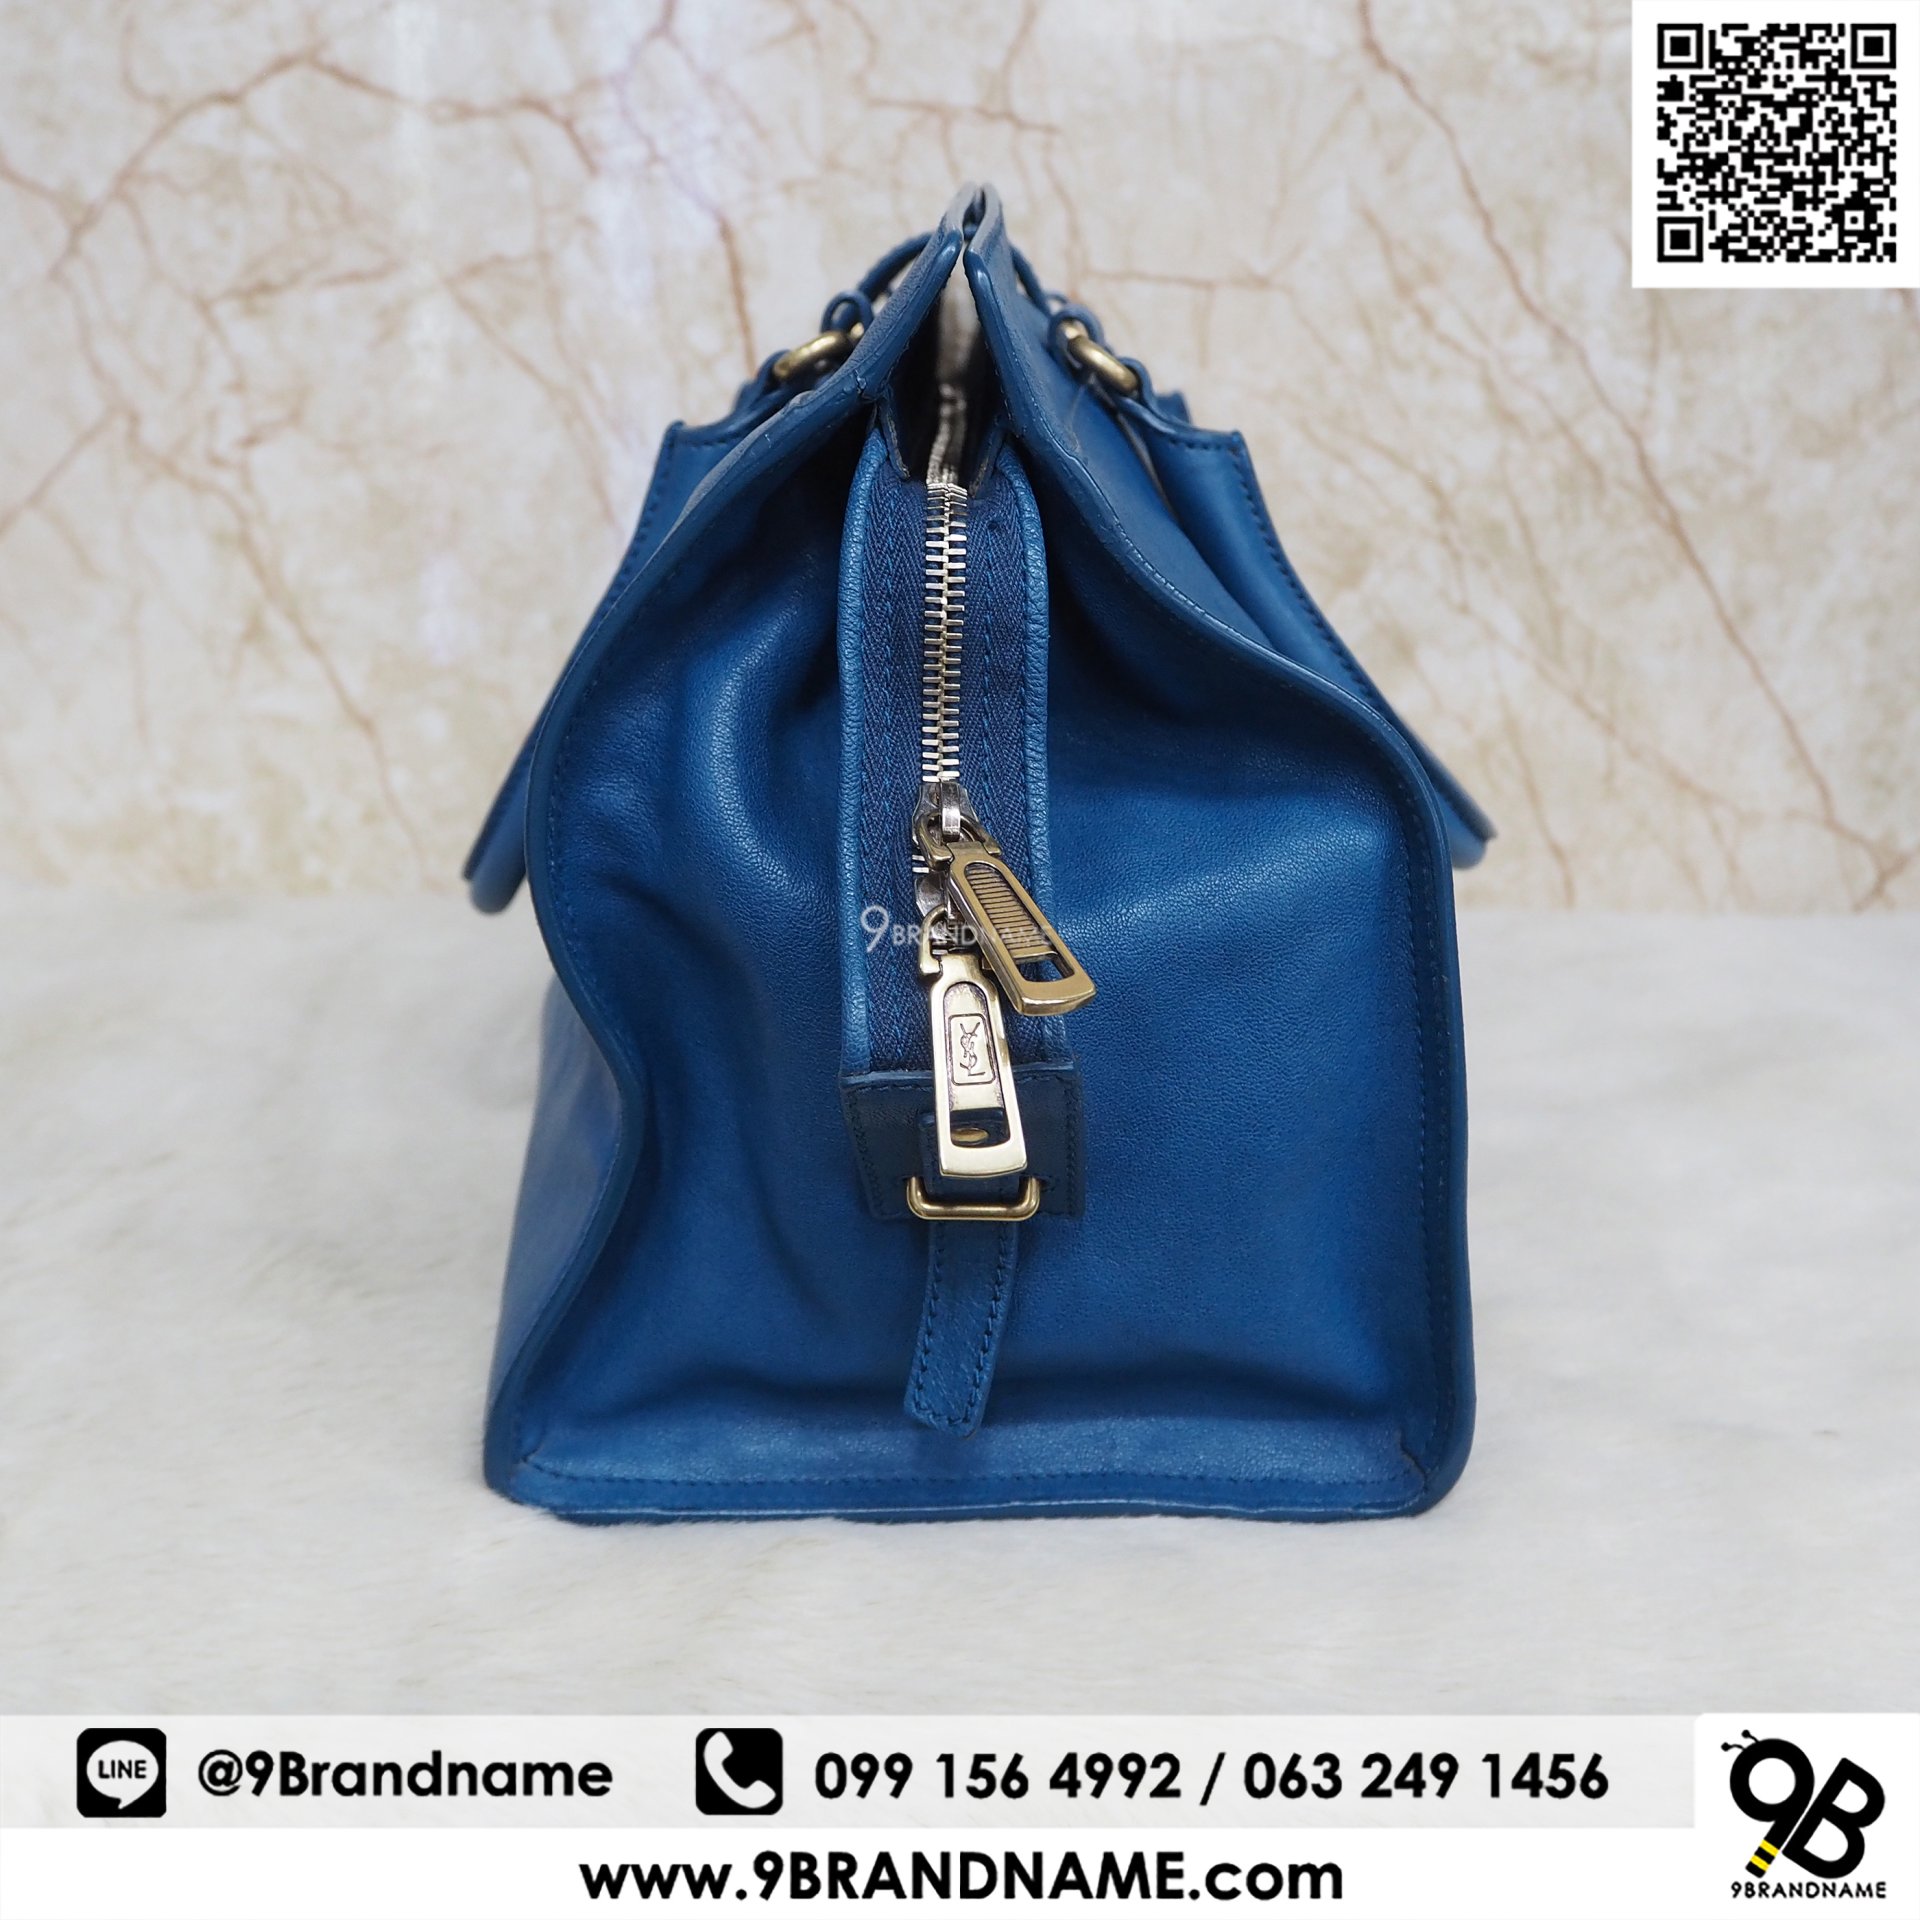 $2300 Yves Saint Laurent YSL Y Cabas Chyc Ligne Royal Cobalt Blue Leather  Medium Tote Bag Purse - Lust4Labels